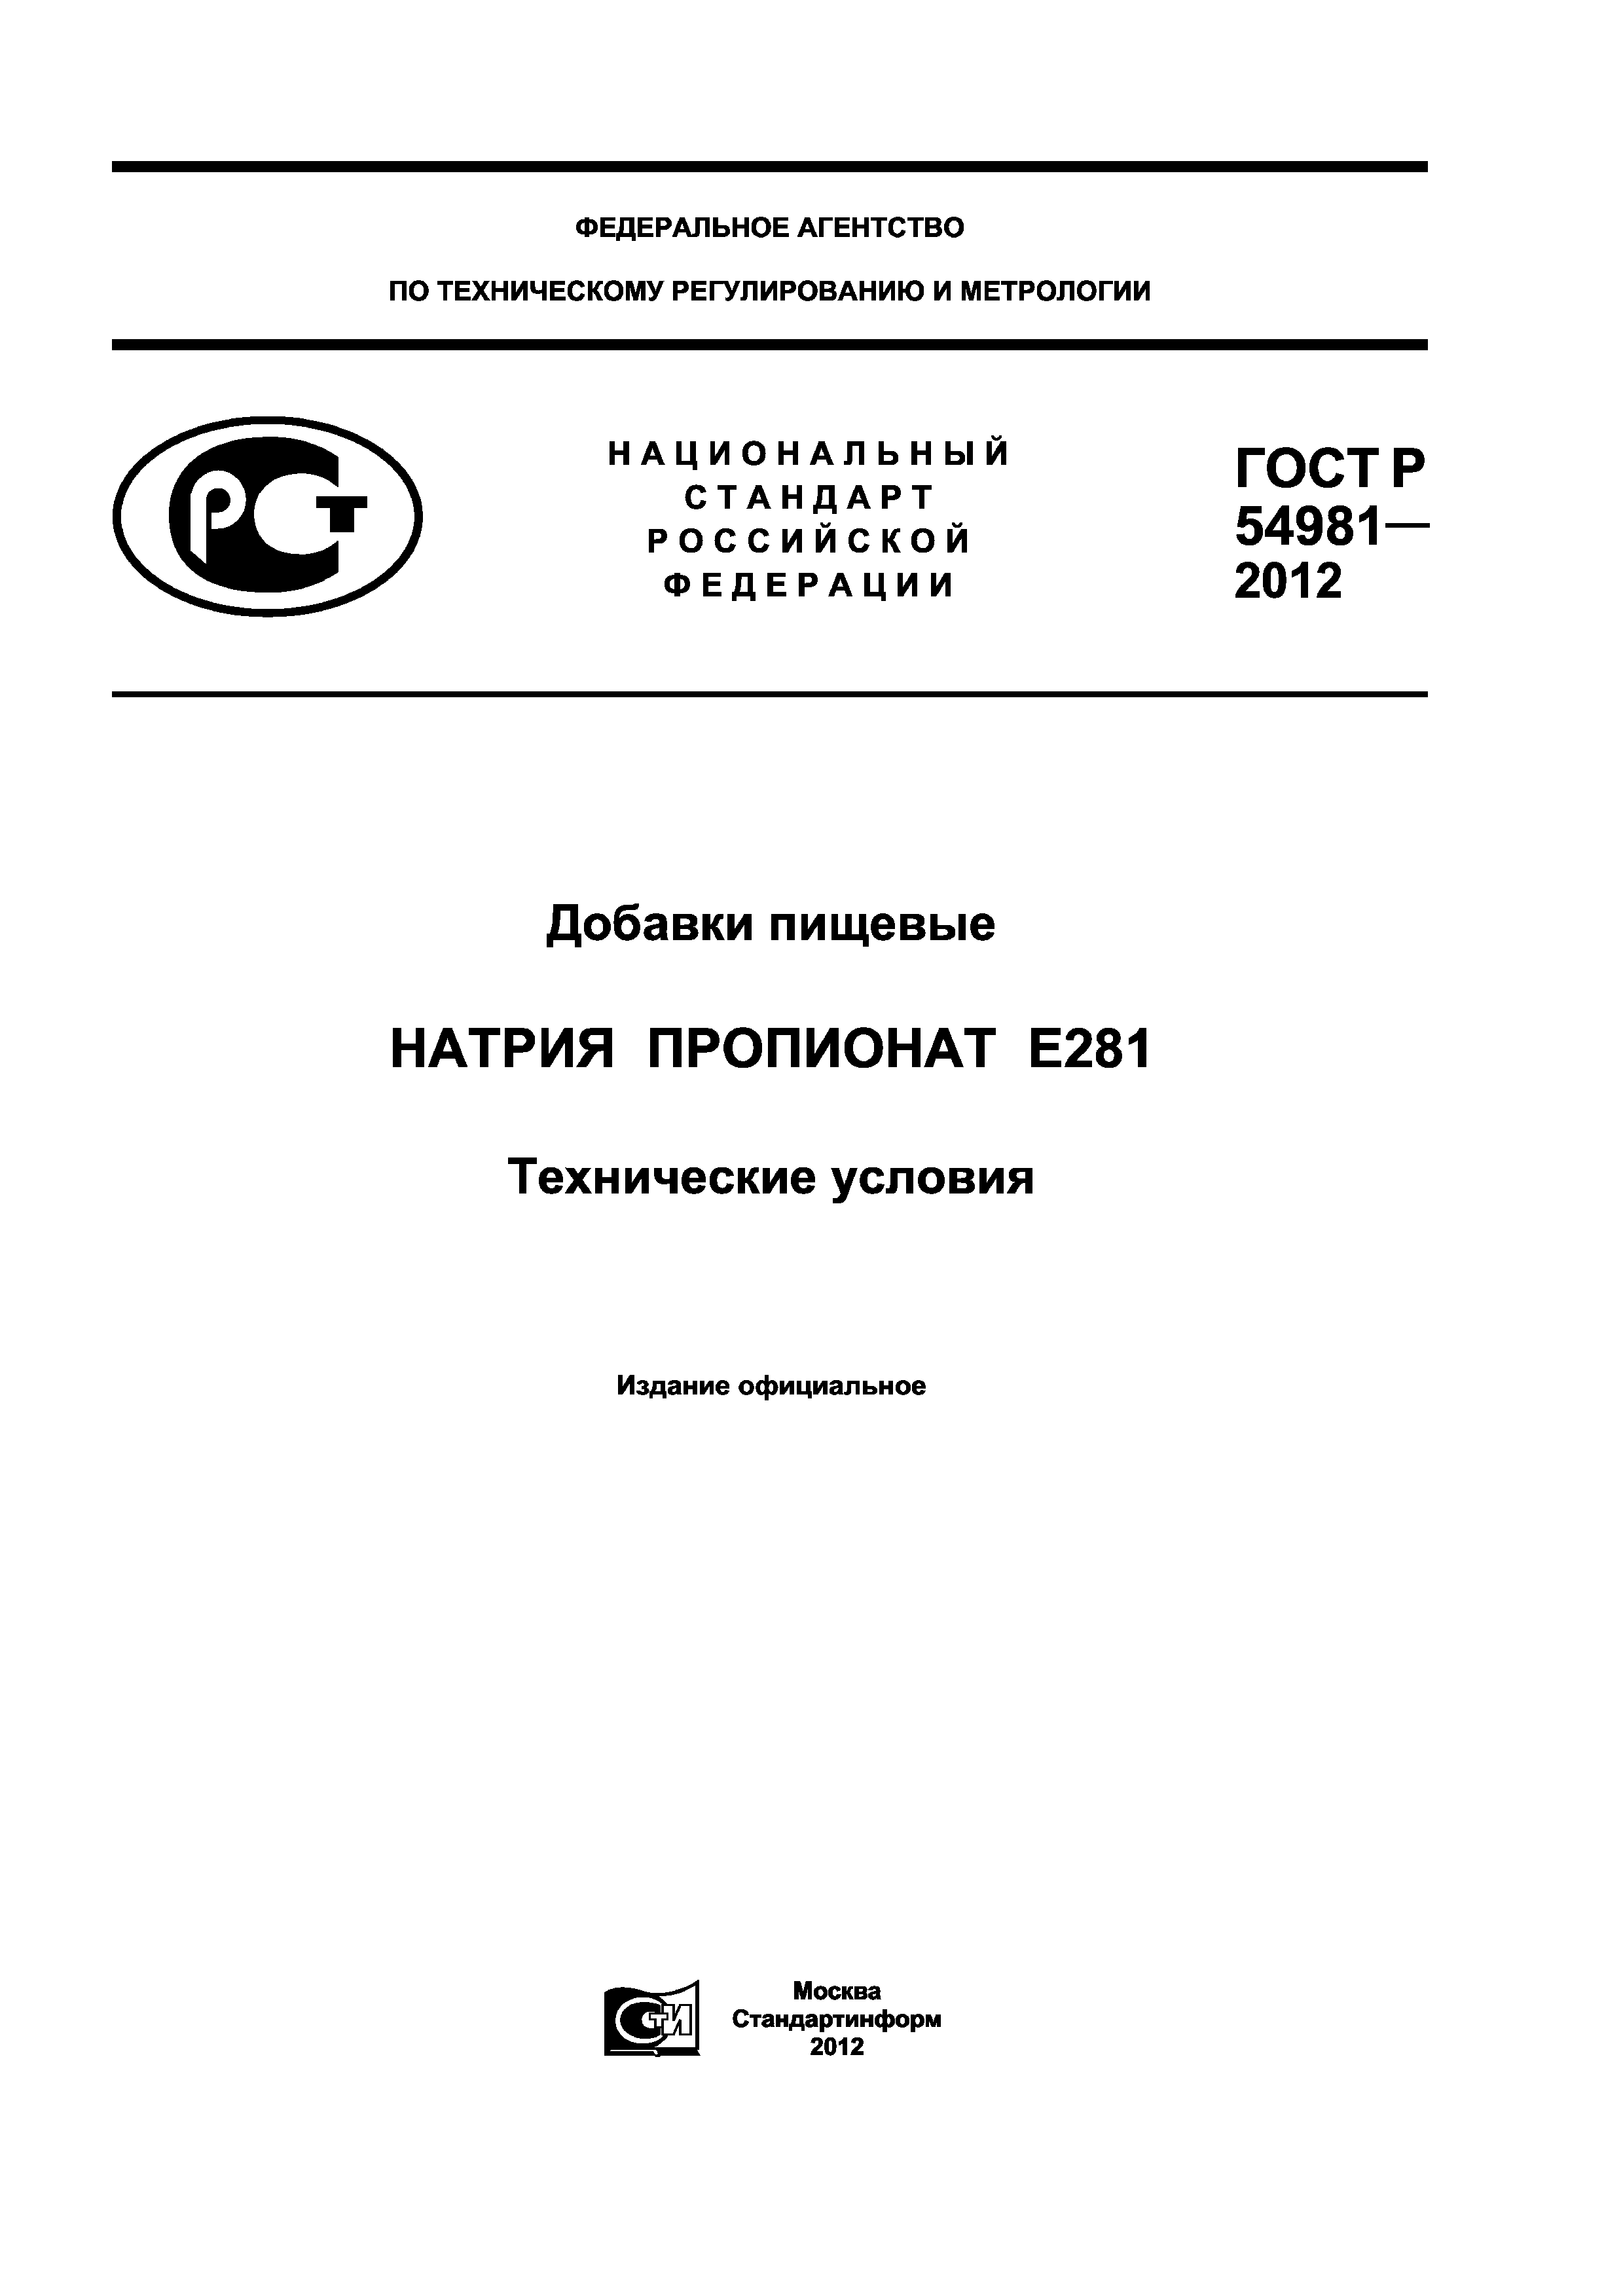 ГОСТ Р 54981-2012